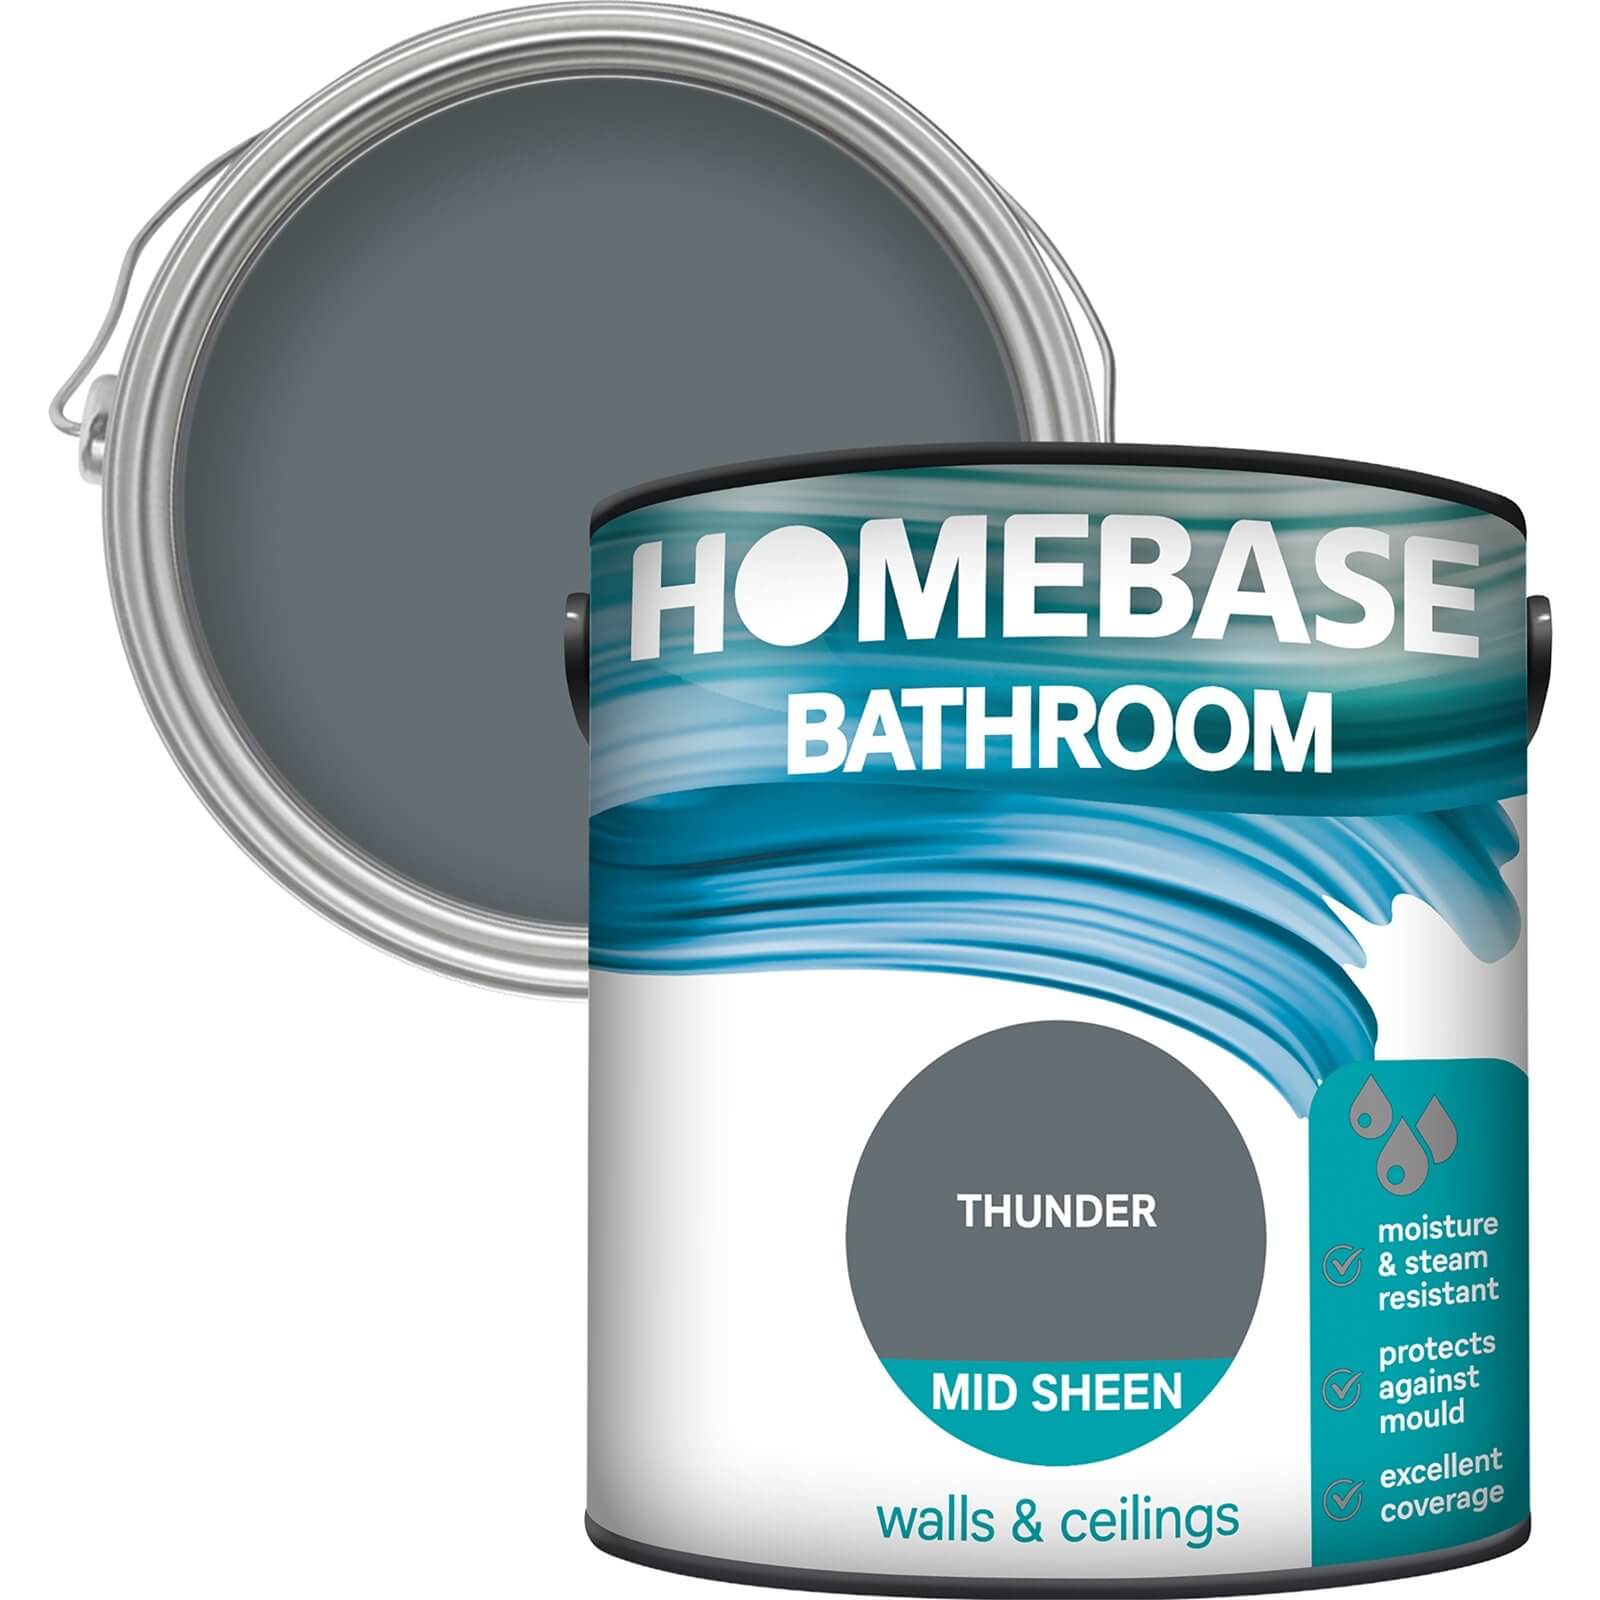 Photo of Homebase Bathroom Mid Sheen Paint - Thunder 2.5l